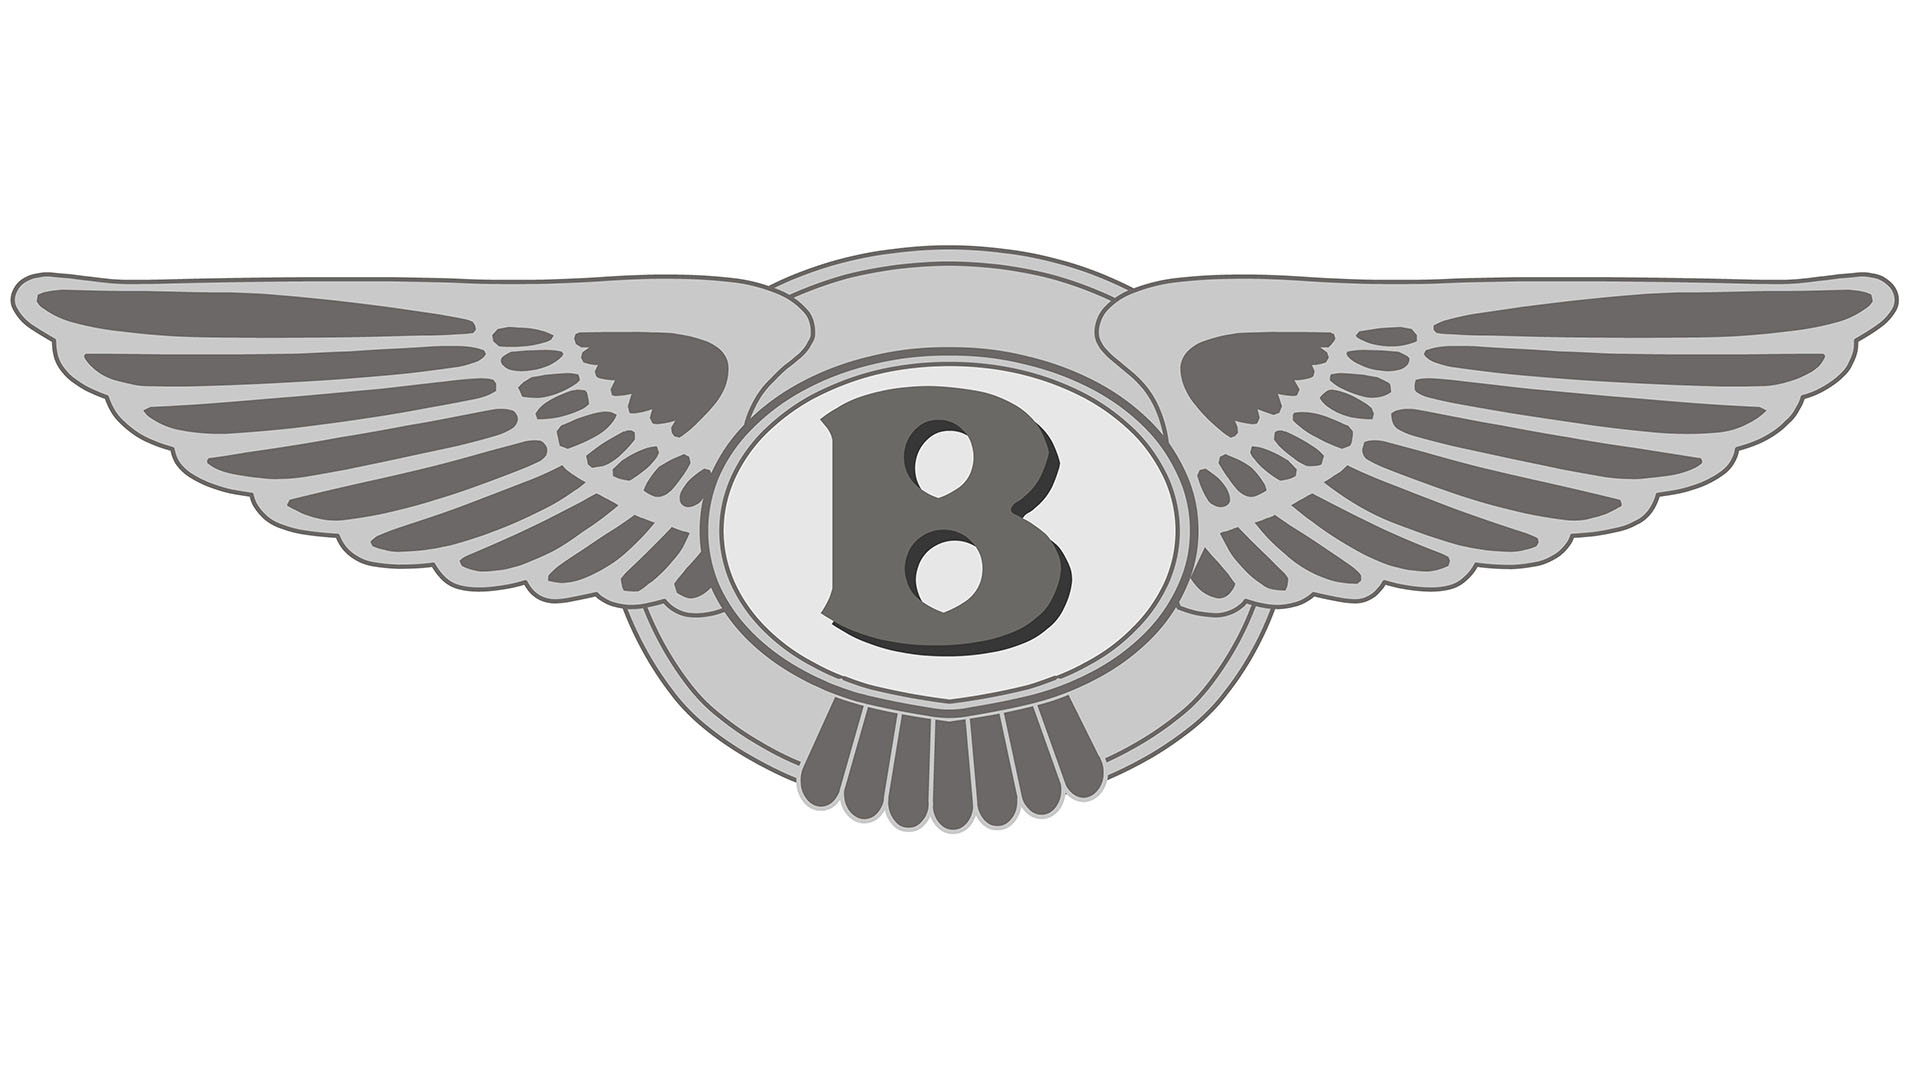 Bentley logo - Bentley Symbol Meaning And History - Car Logos